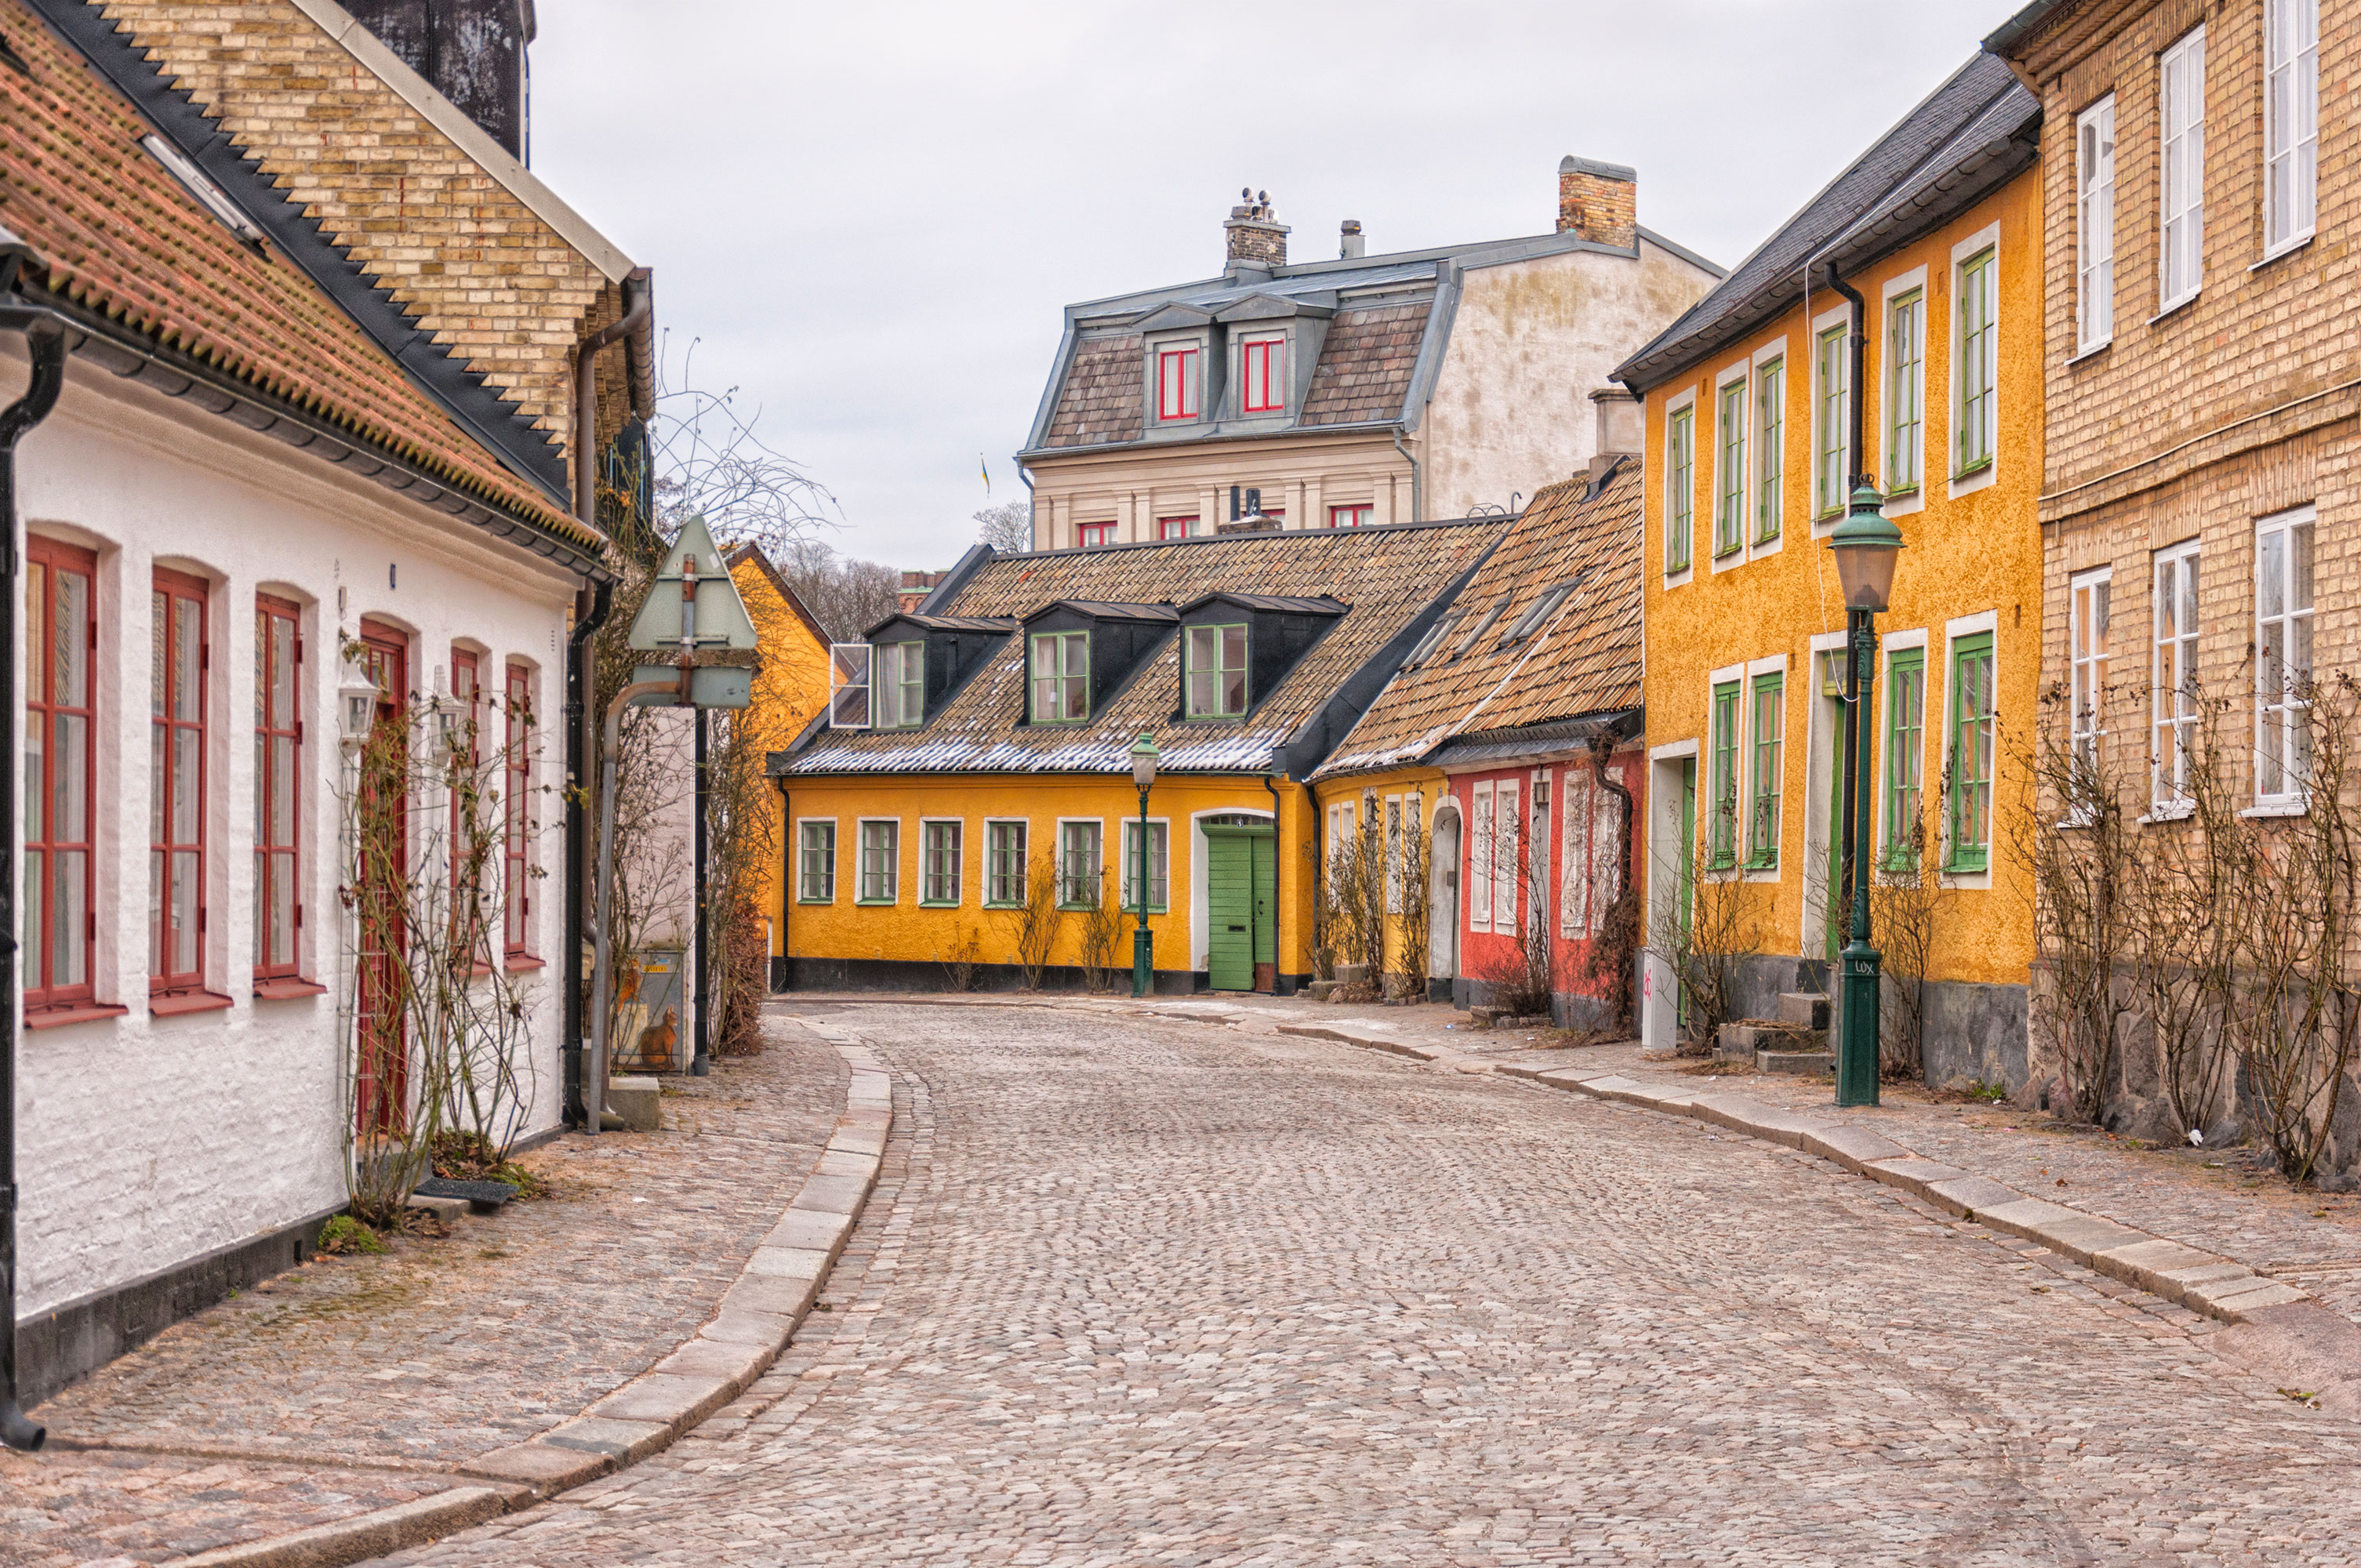 3-minute travel guide: Lund, Sweden